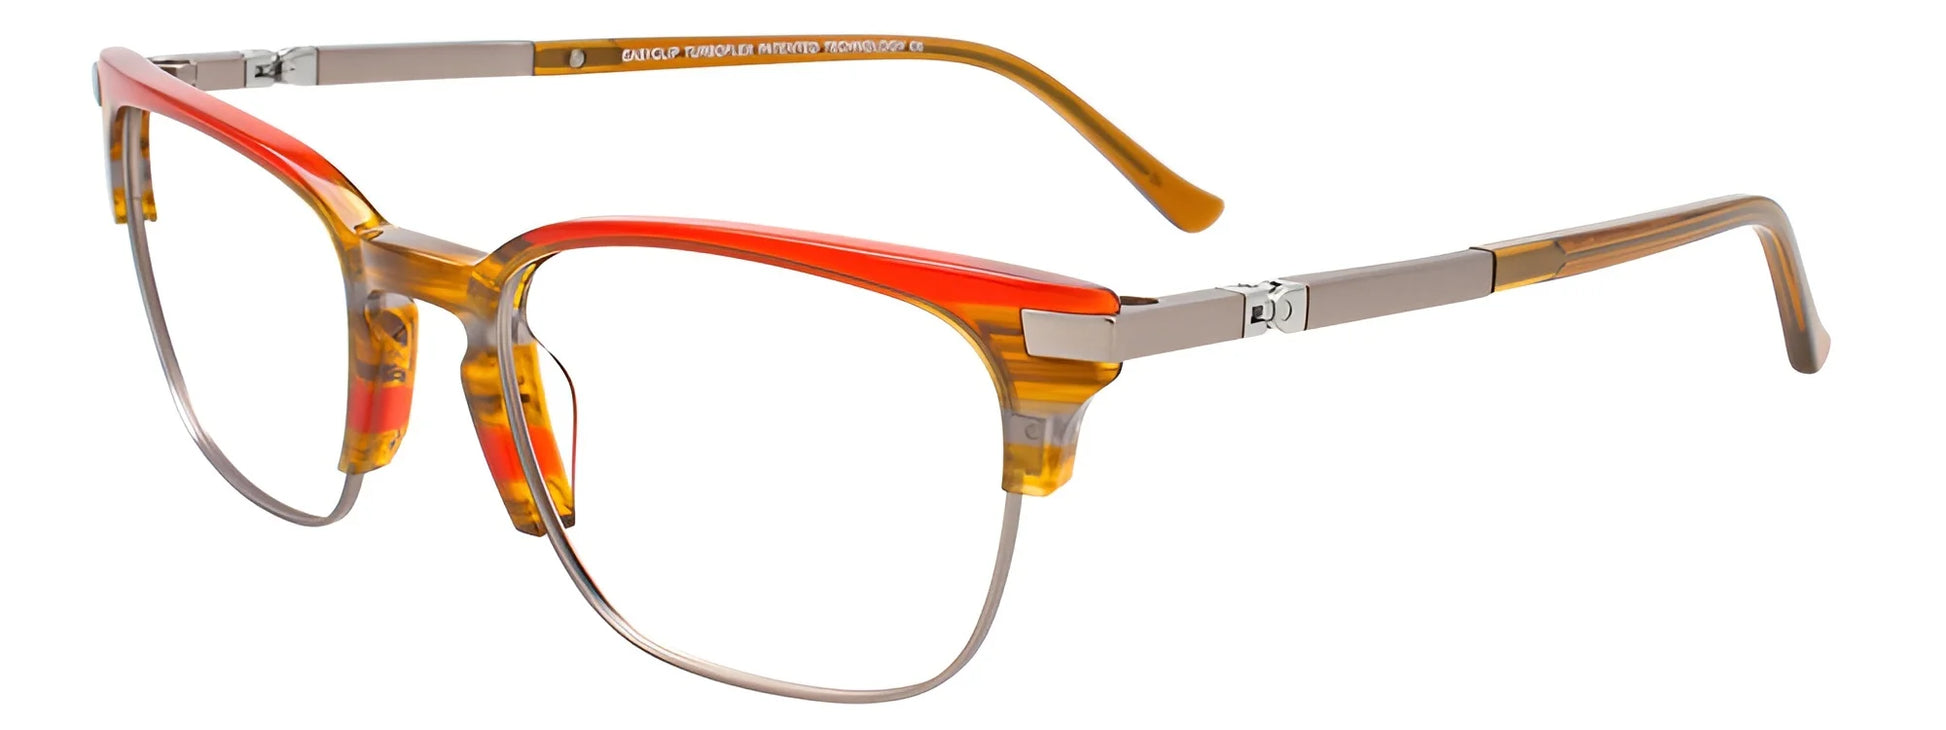 EasyClip EC531 Eyeglasses with Clip-on Sunglasses Brown & Red & Grey Marbled & Matt Steel